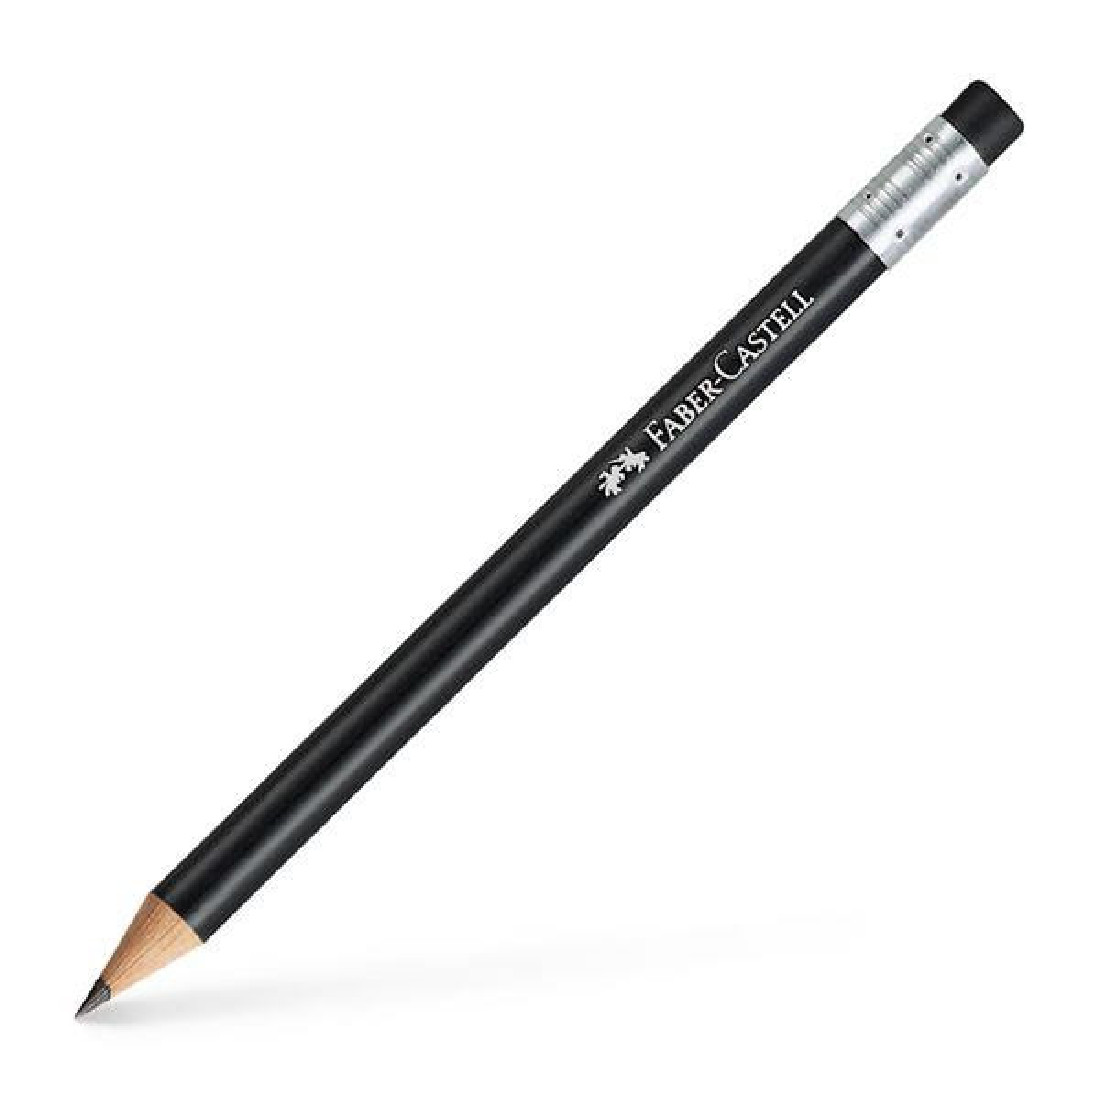 Faber Castell Perfect pencil DESIGN spare pencil black (118347)